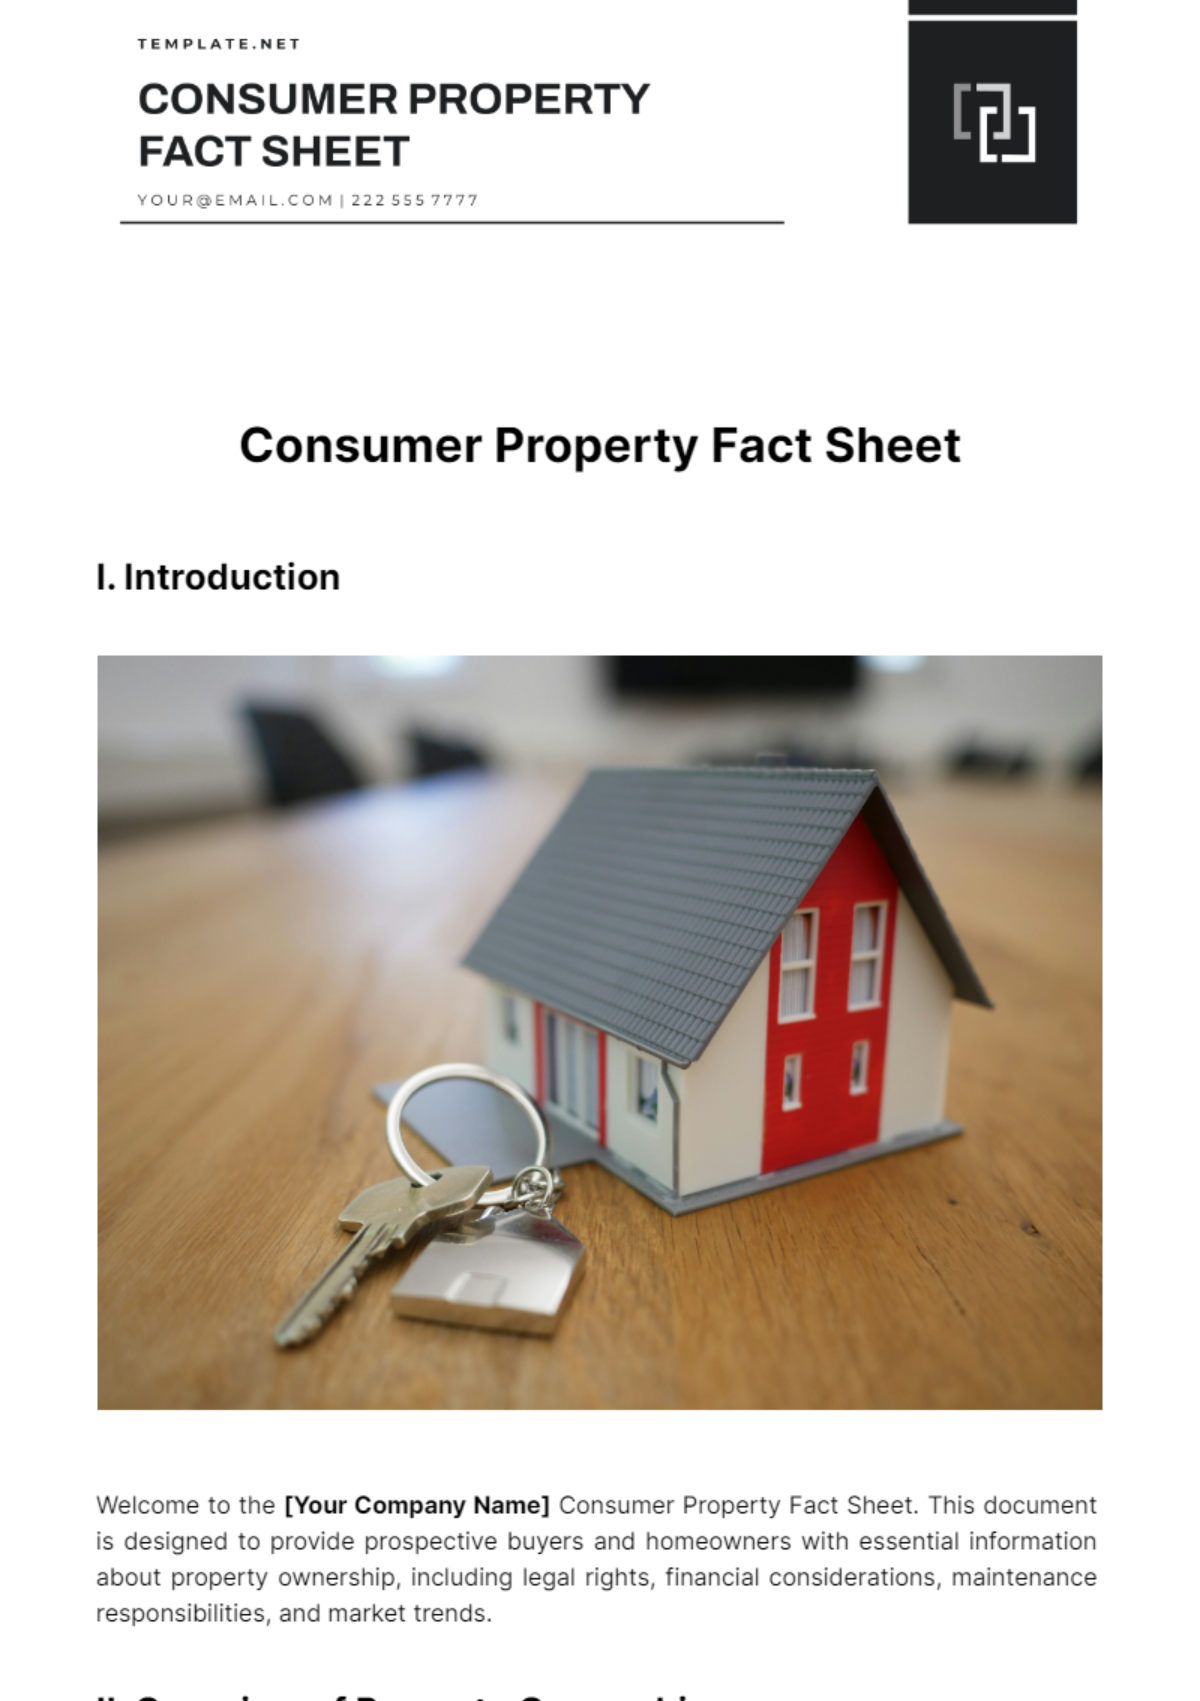 Consumer Property Fact Sheet Template